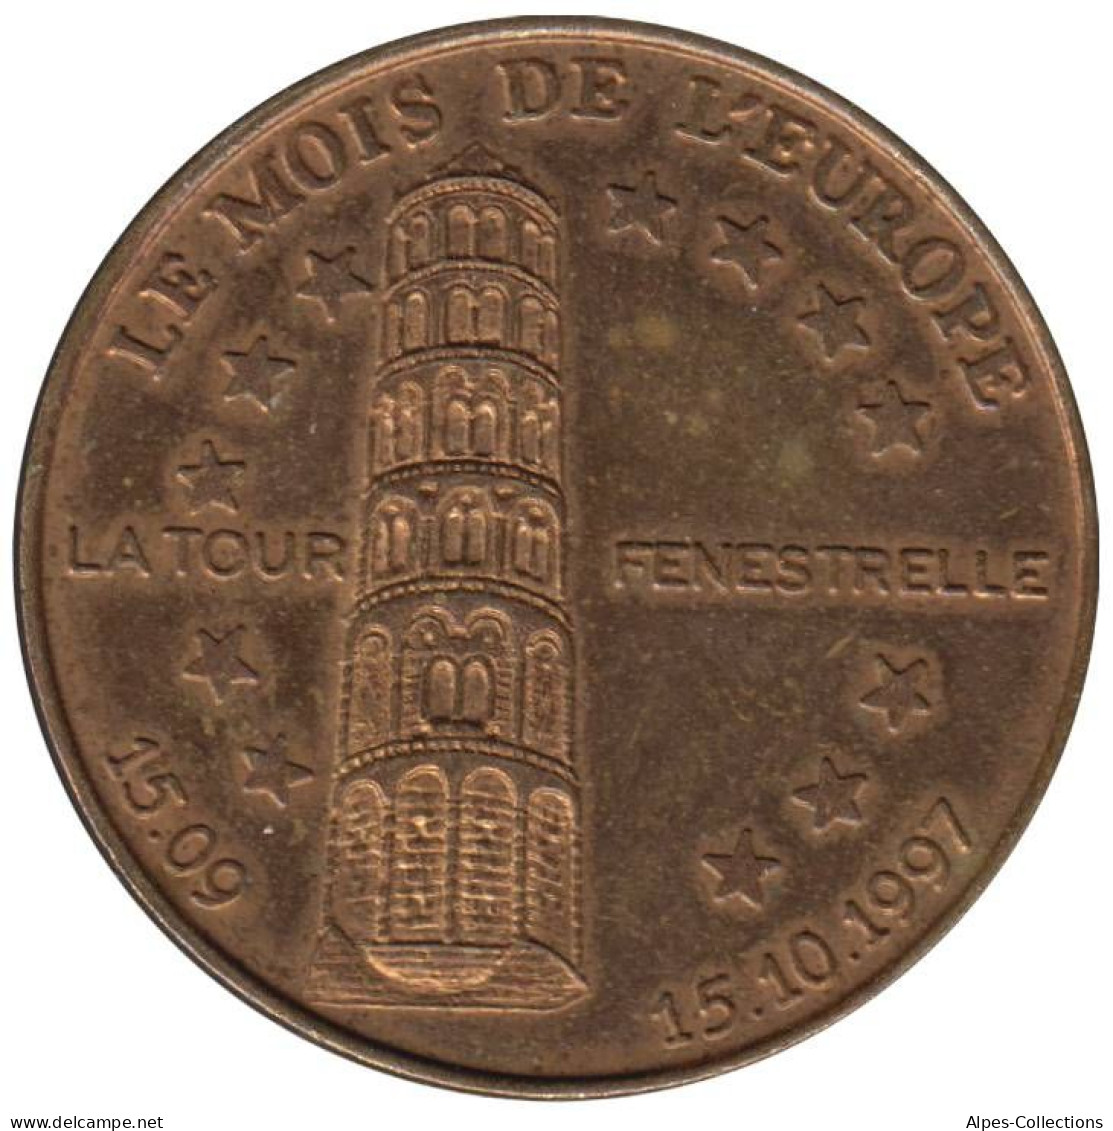 UZES - EU0015.1 - 1,5 EURO DES VILLES - Réf: NR - 1997 - Euros Of The Cities